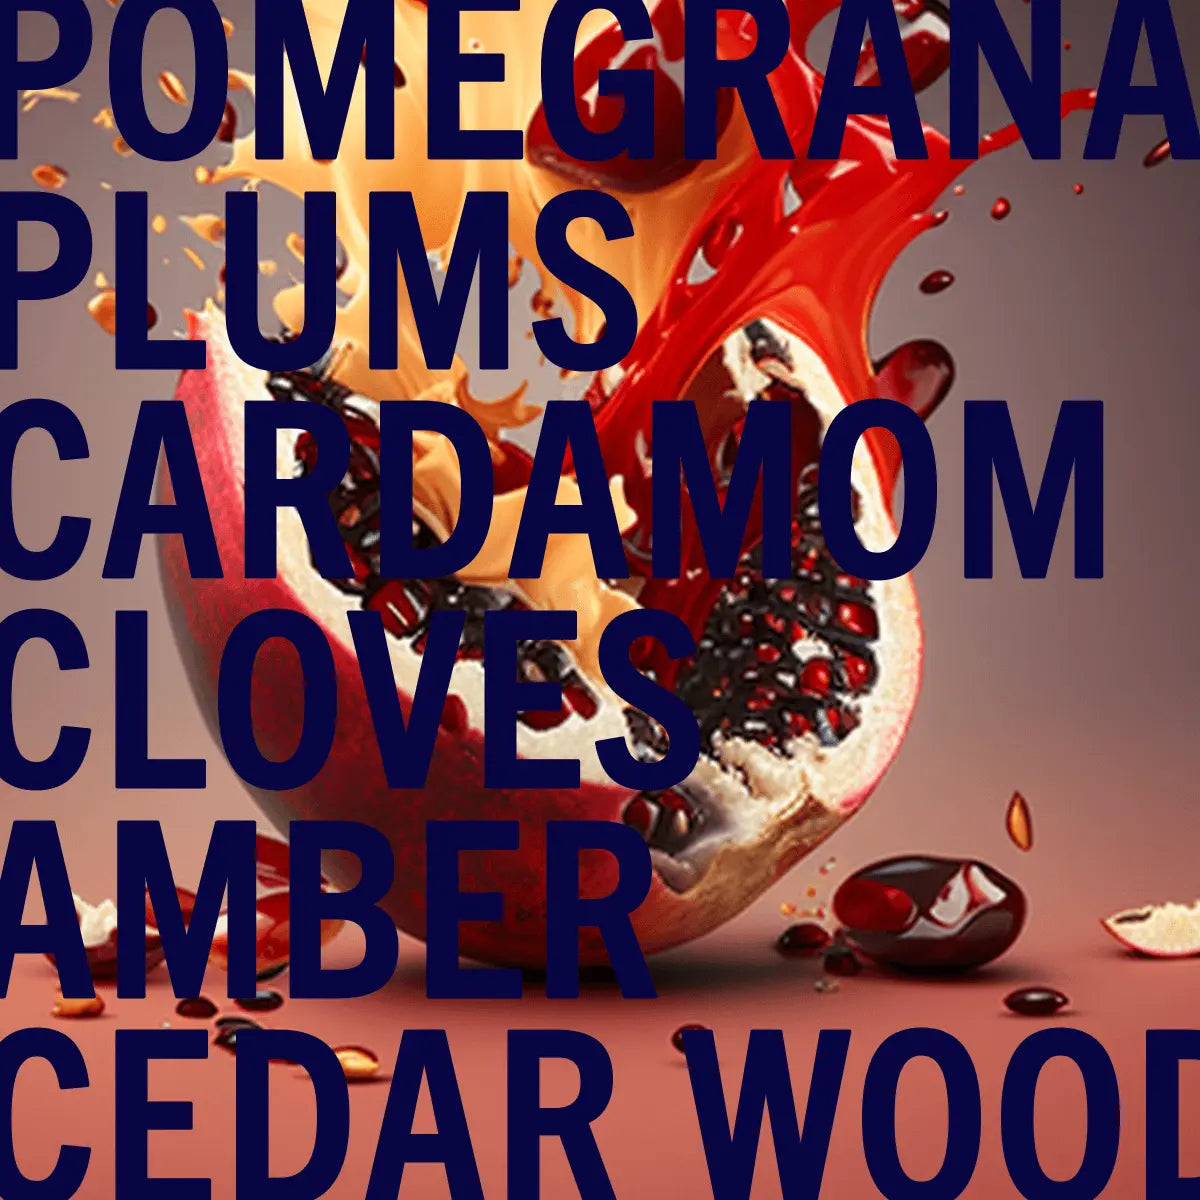 Limited Edition Dark Amber Pomegranate Fragrance Noir 3.4oz